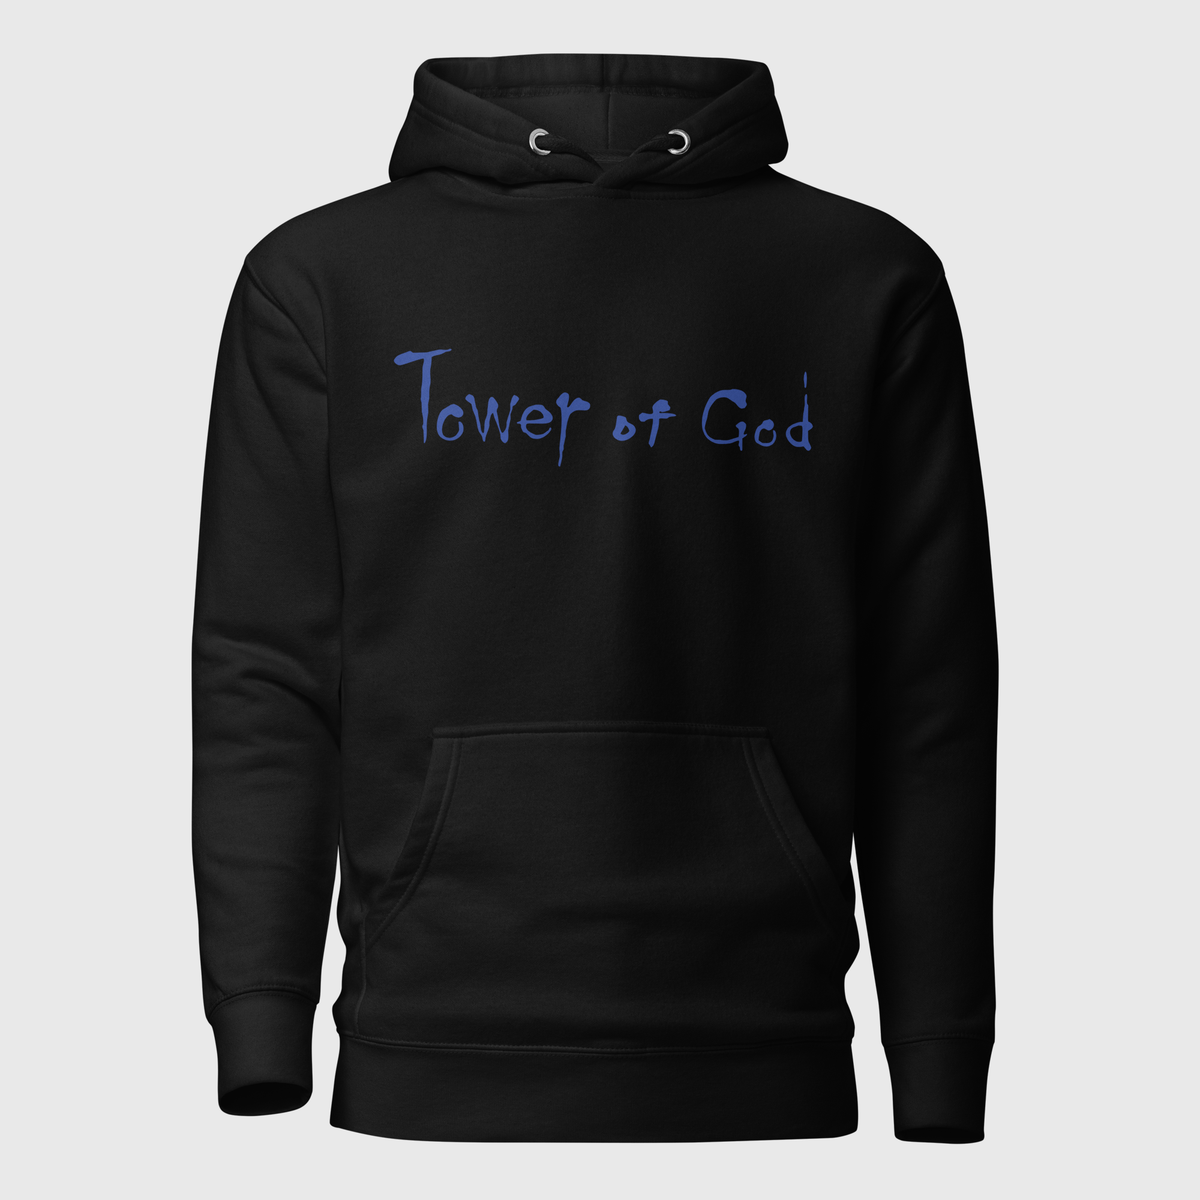 TOWER OF GOD - UNISEX HOODIE WEBTOON ENTERTAINMENT